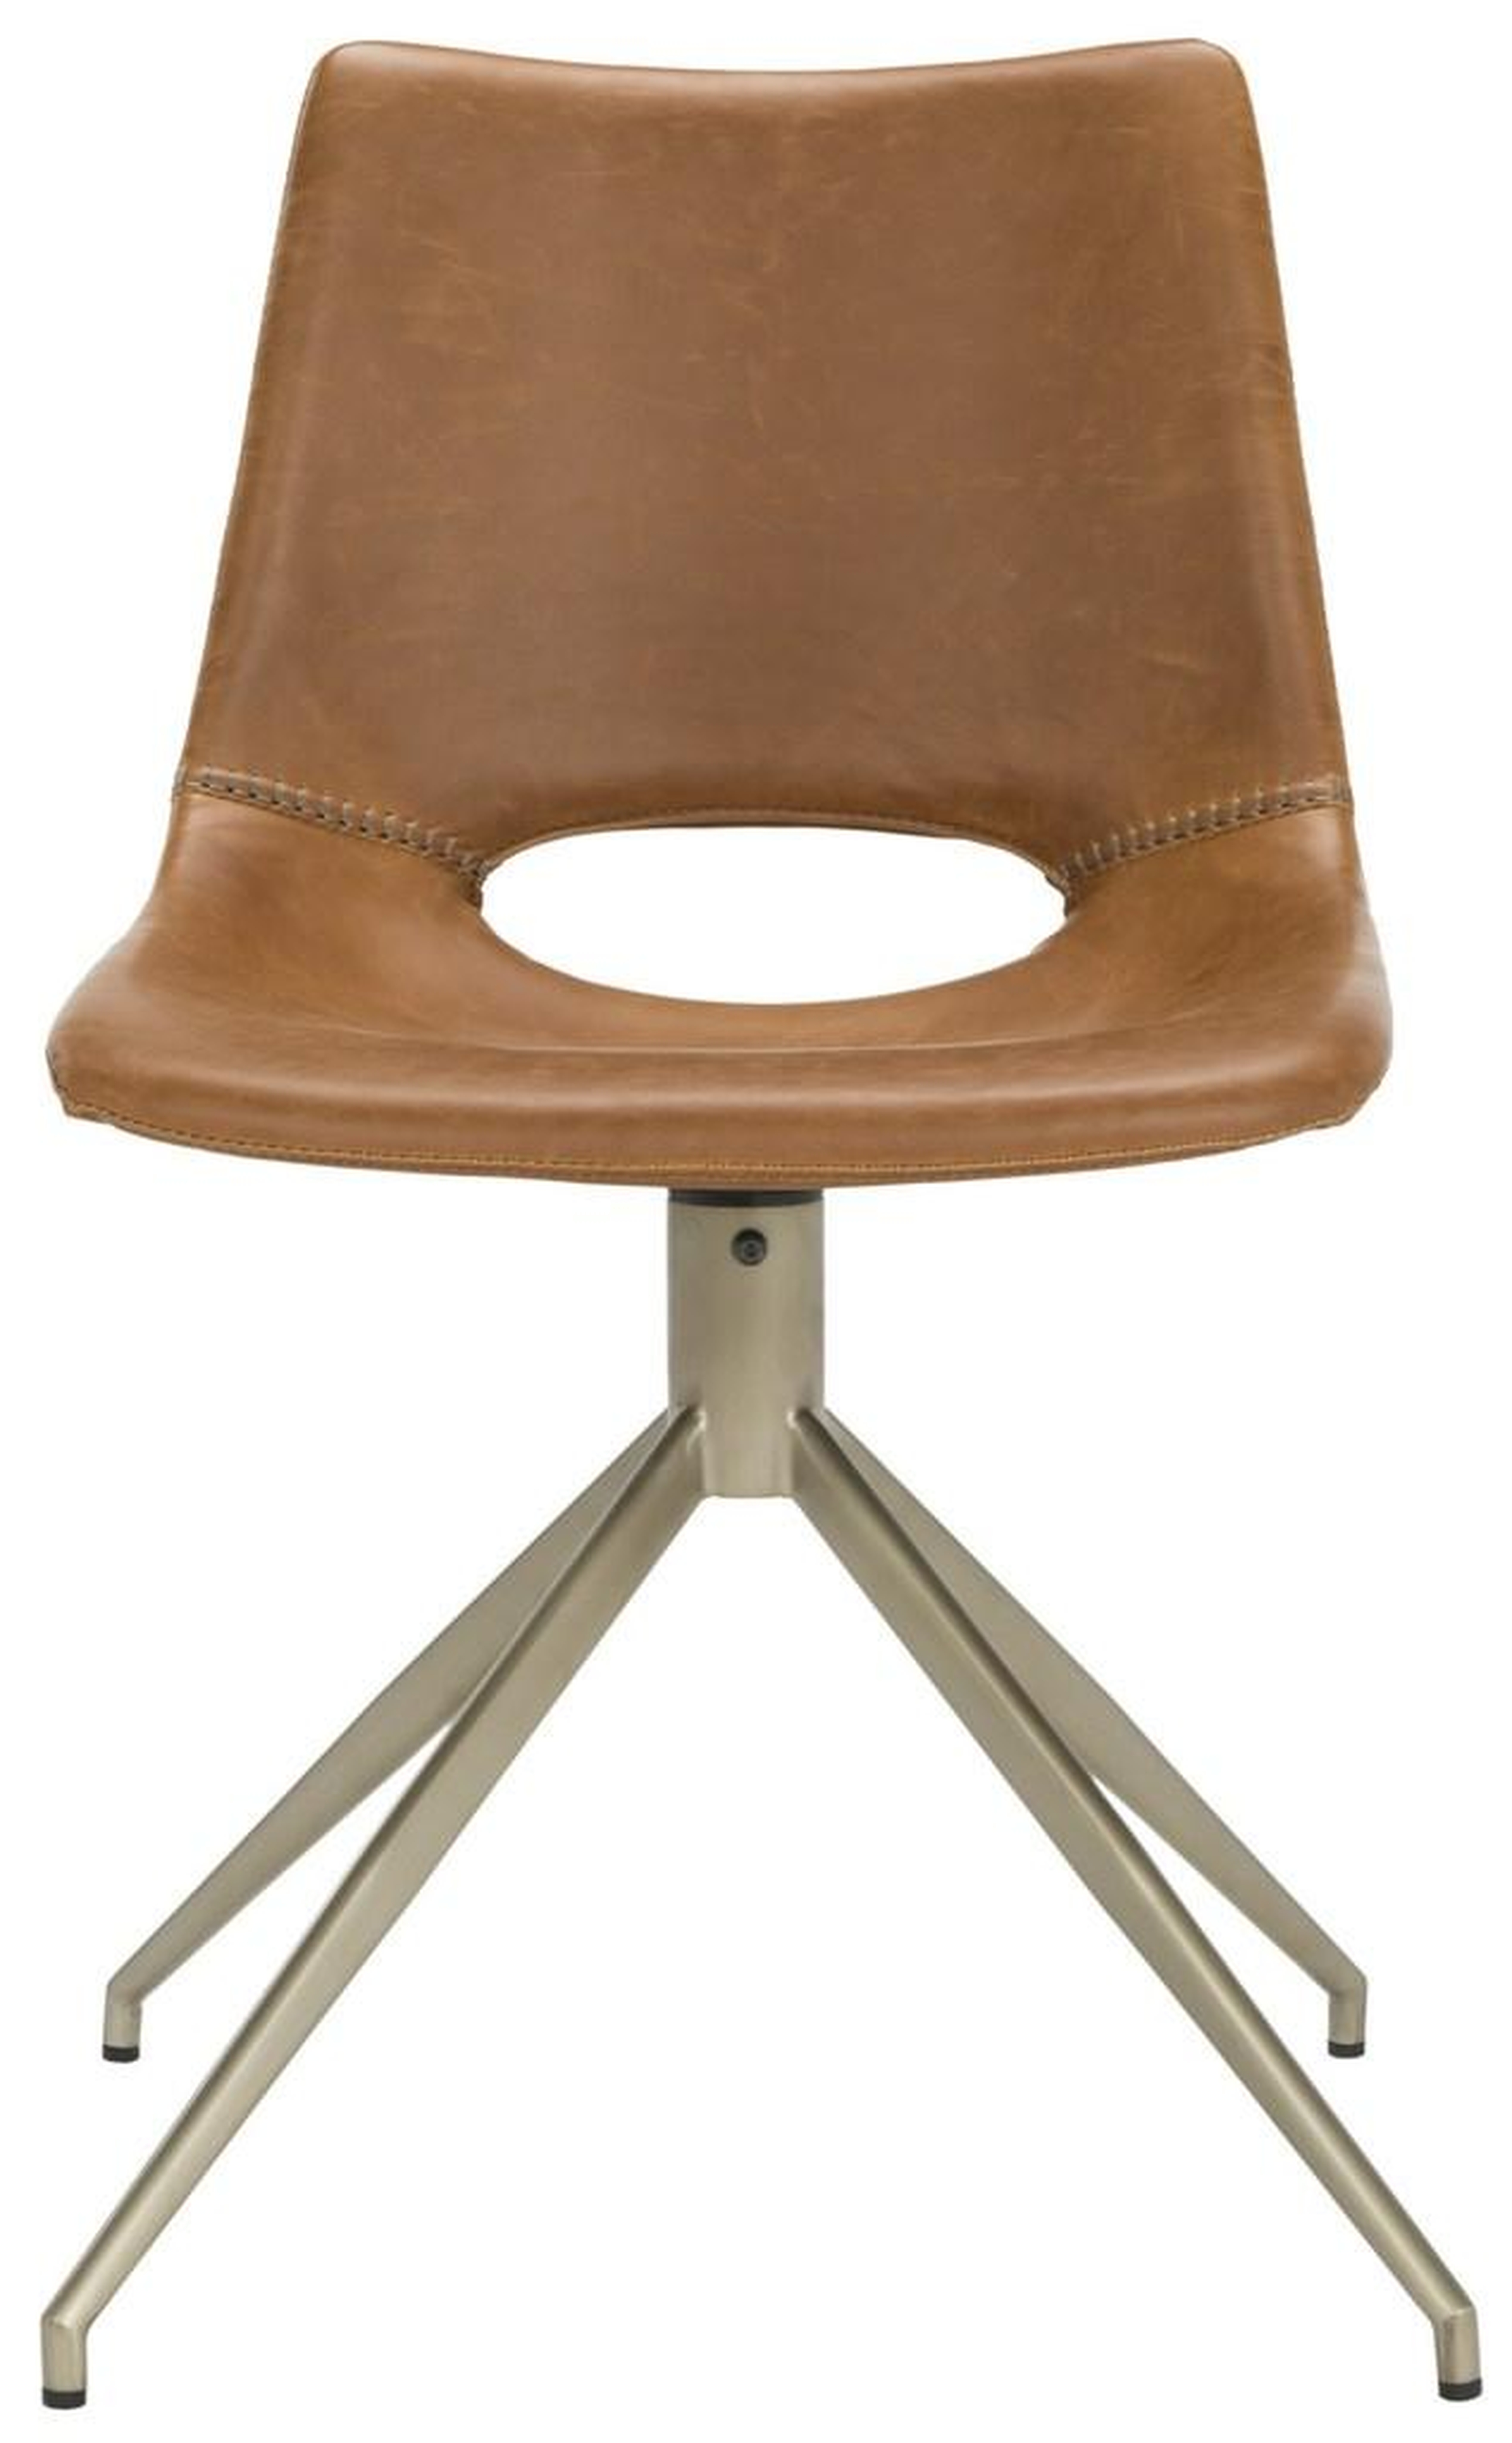 Danube Midcentury Modern Leather Swivel Dining Chair - Light Brown/Brass - Arlo Home - Arlo Home